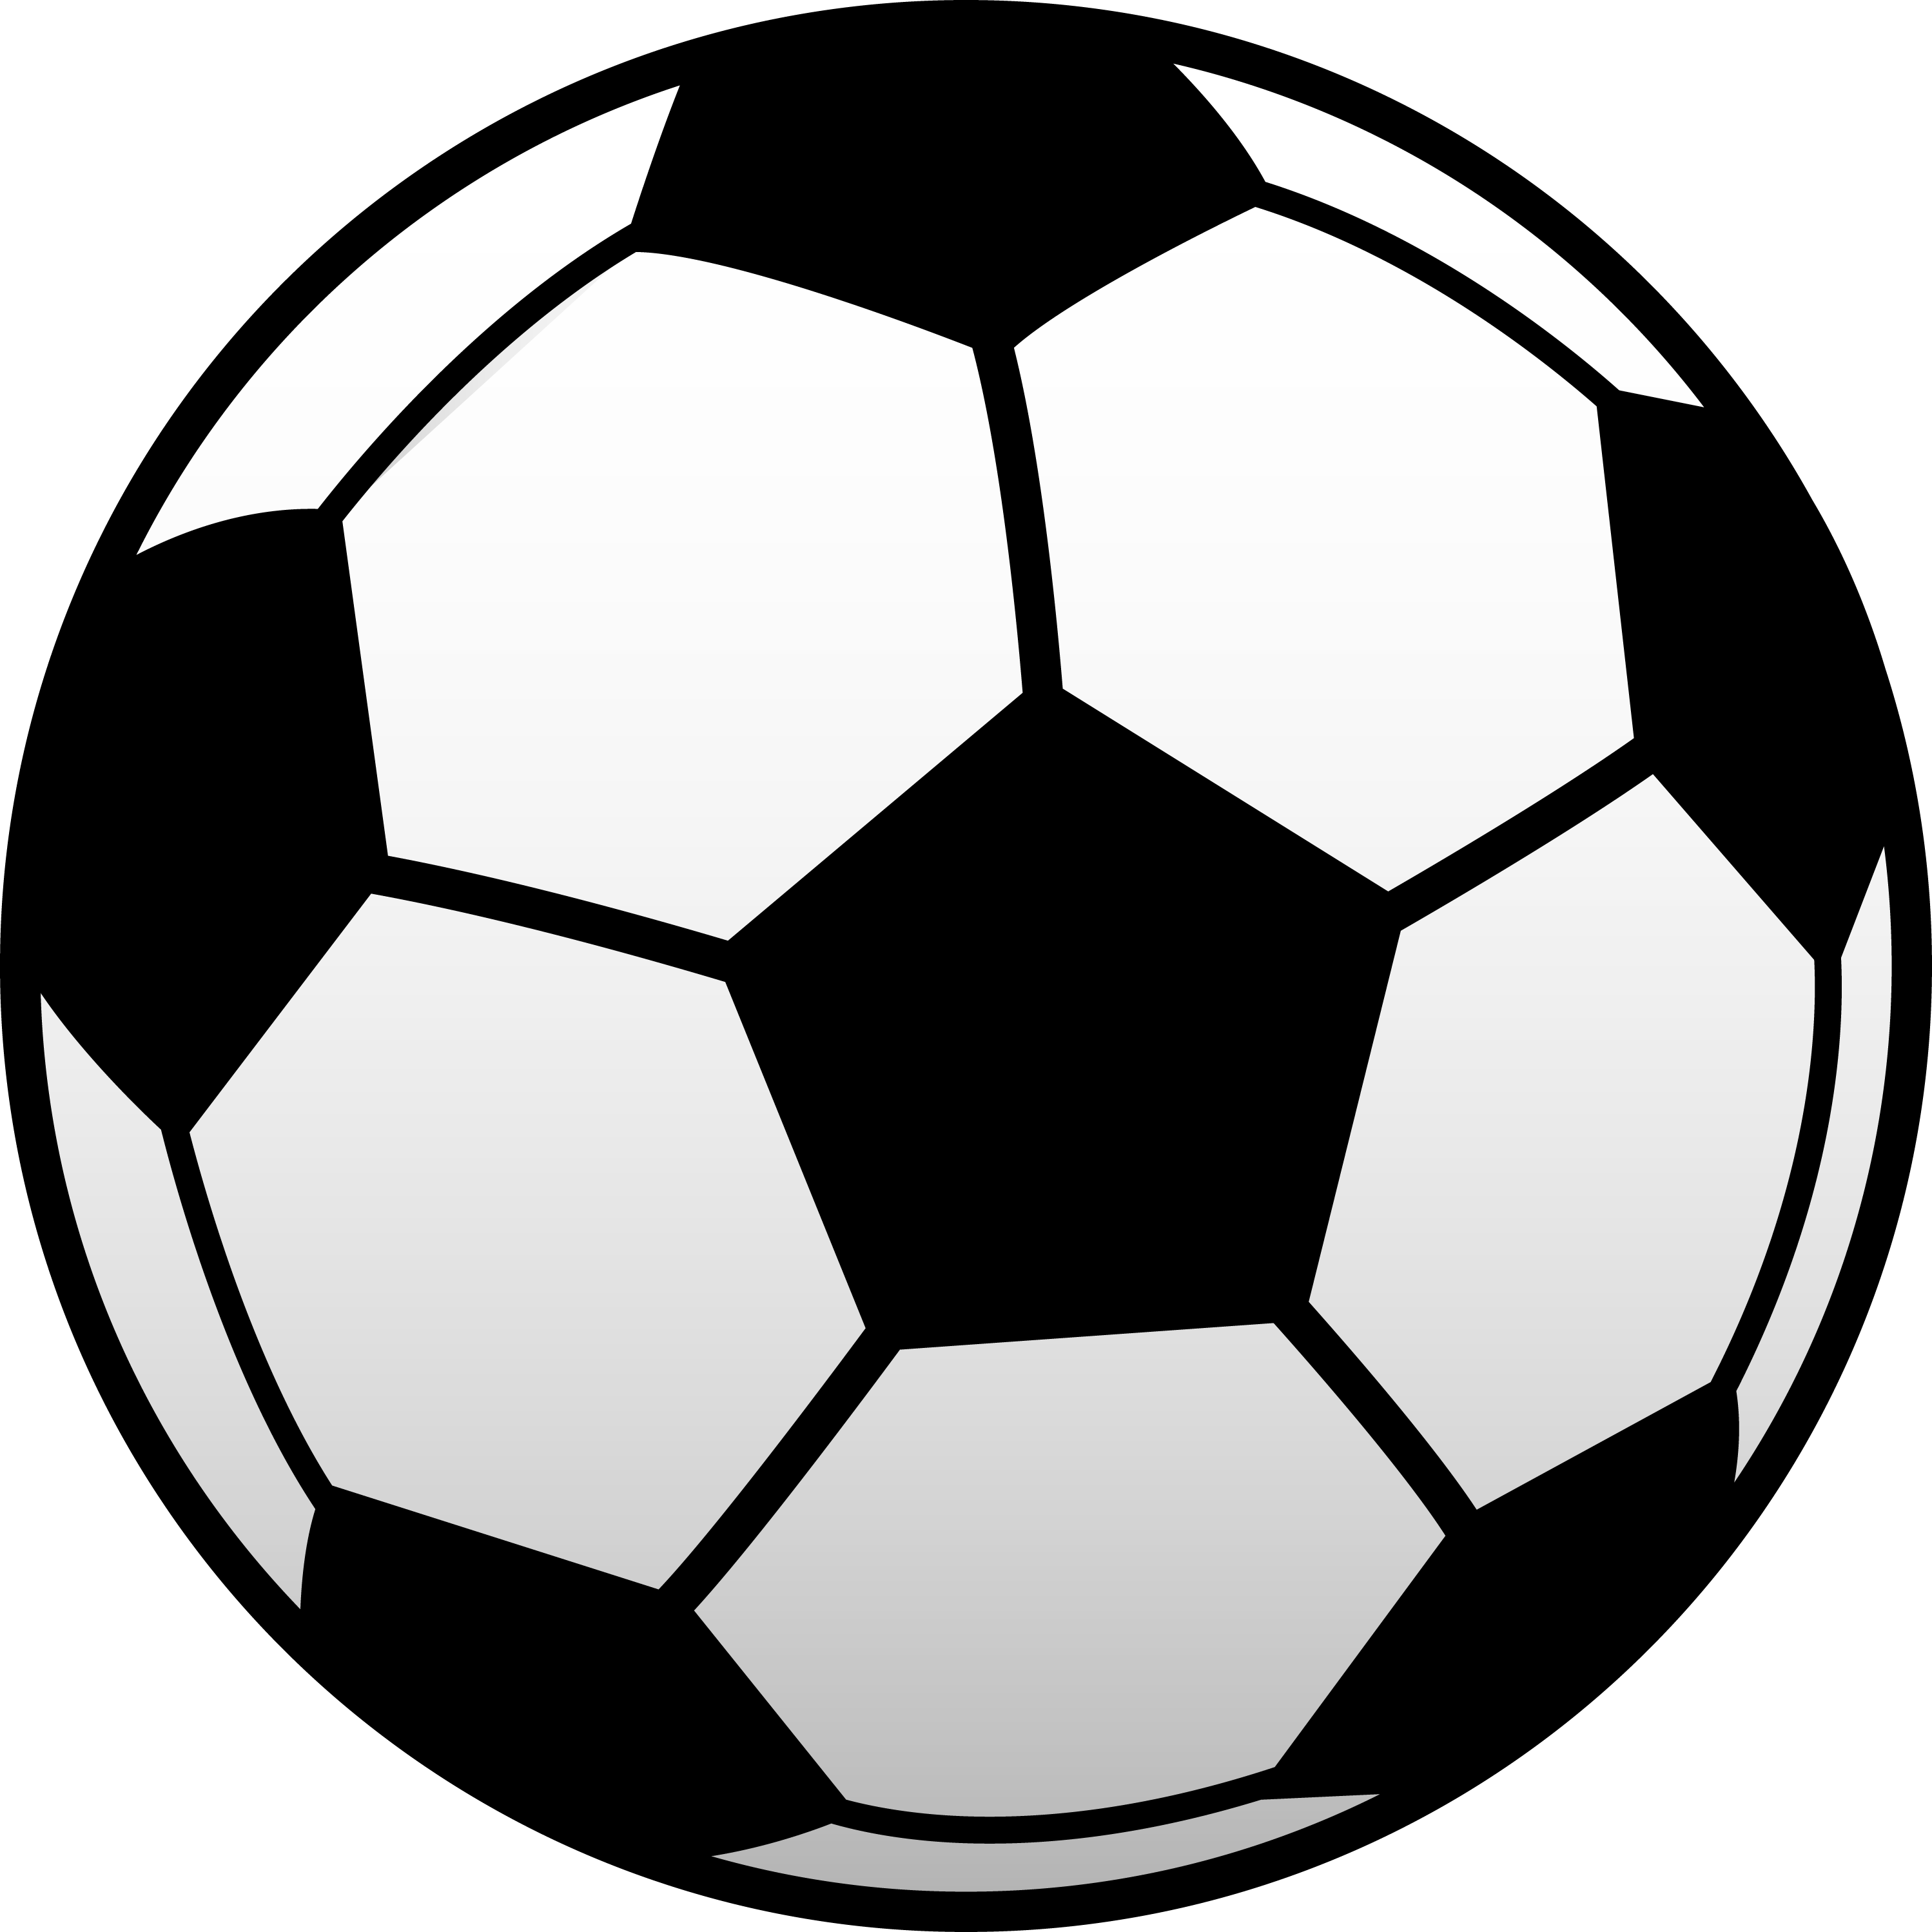 Soccer Ball Outline Clip Art Vector Clip Art Online Royalty | All ...